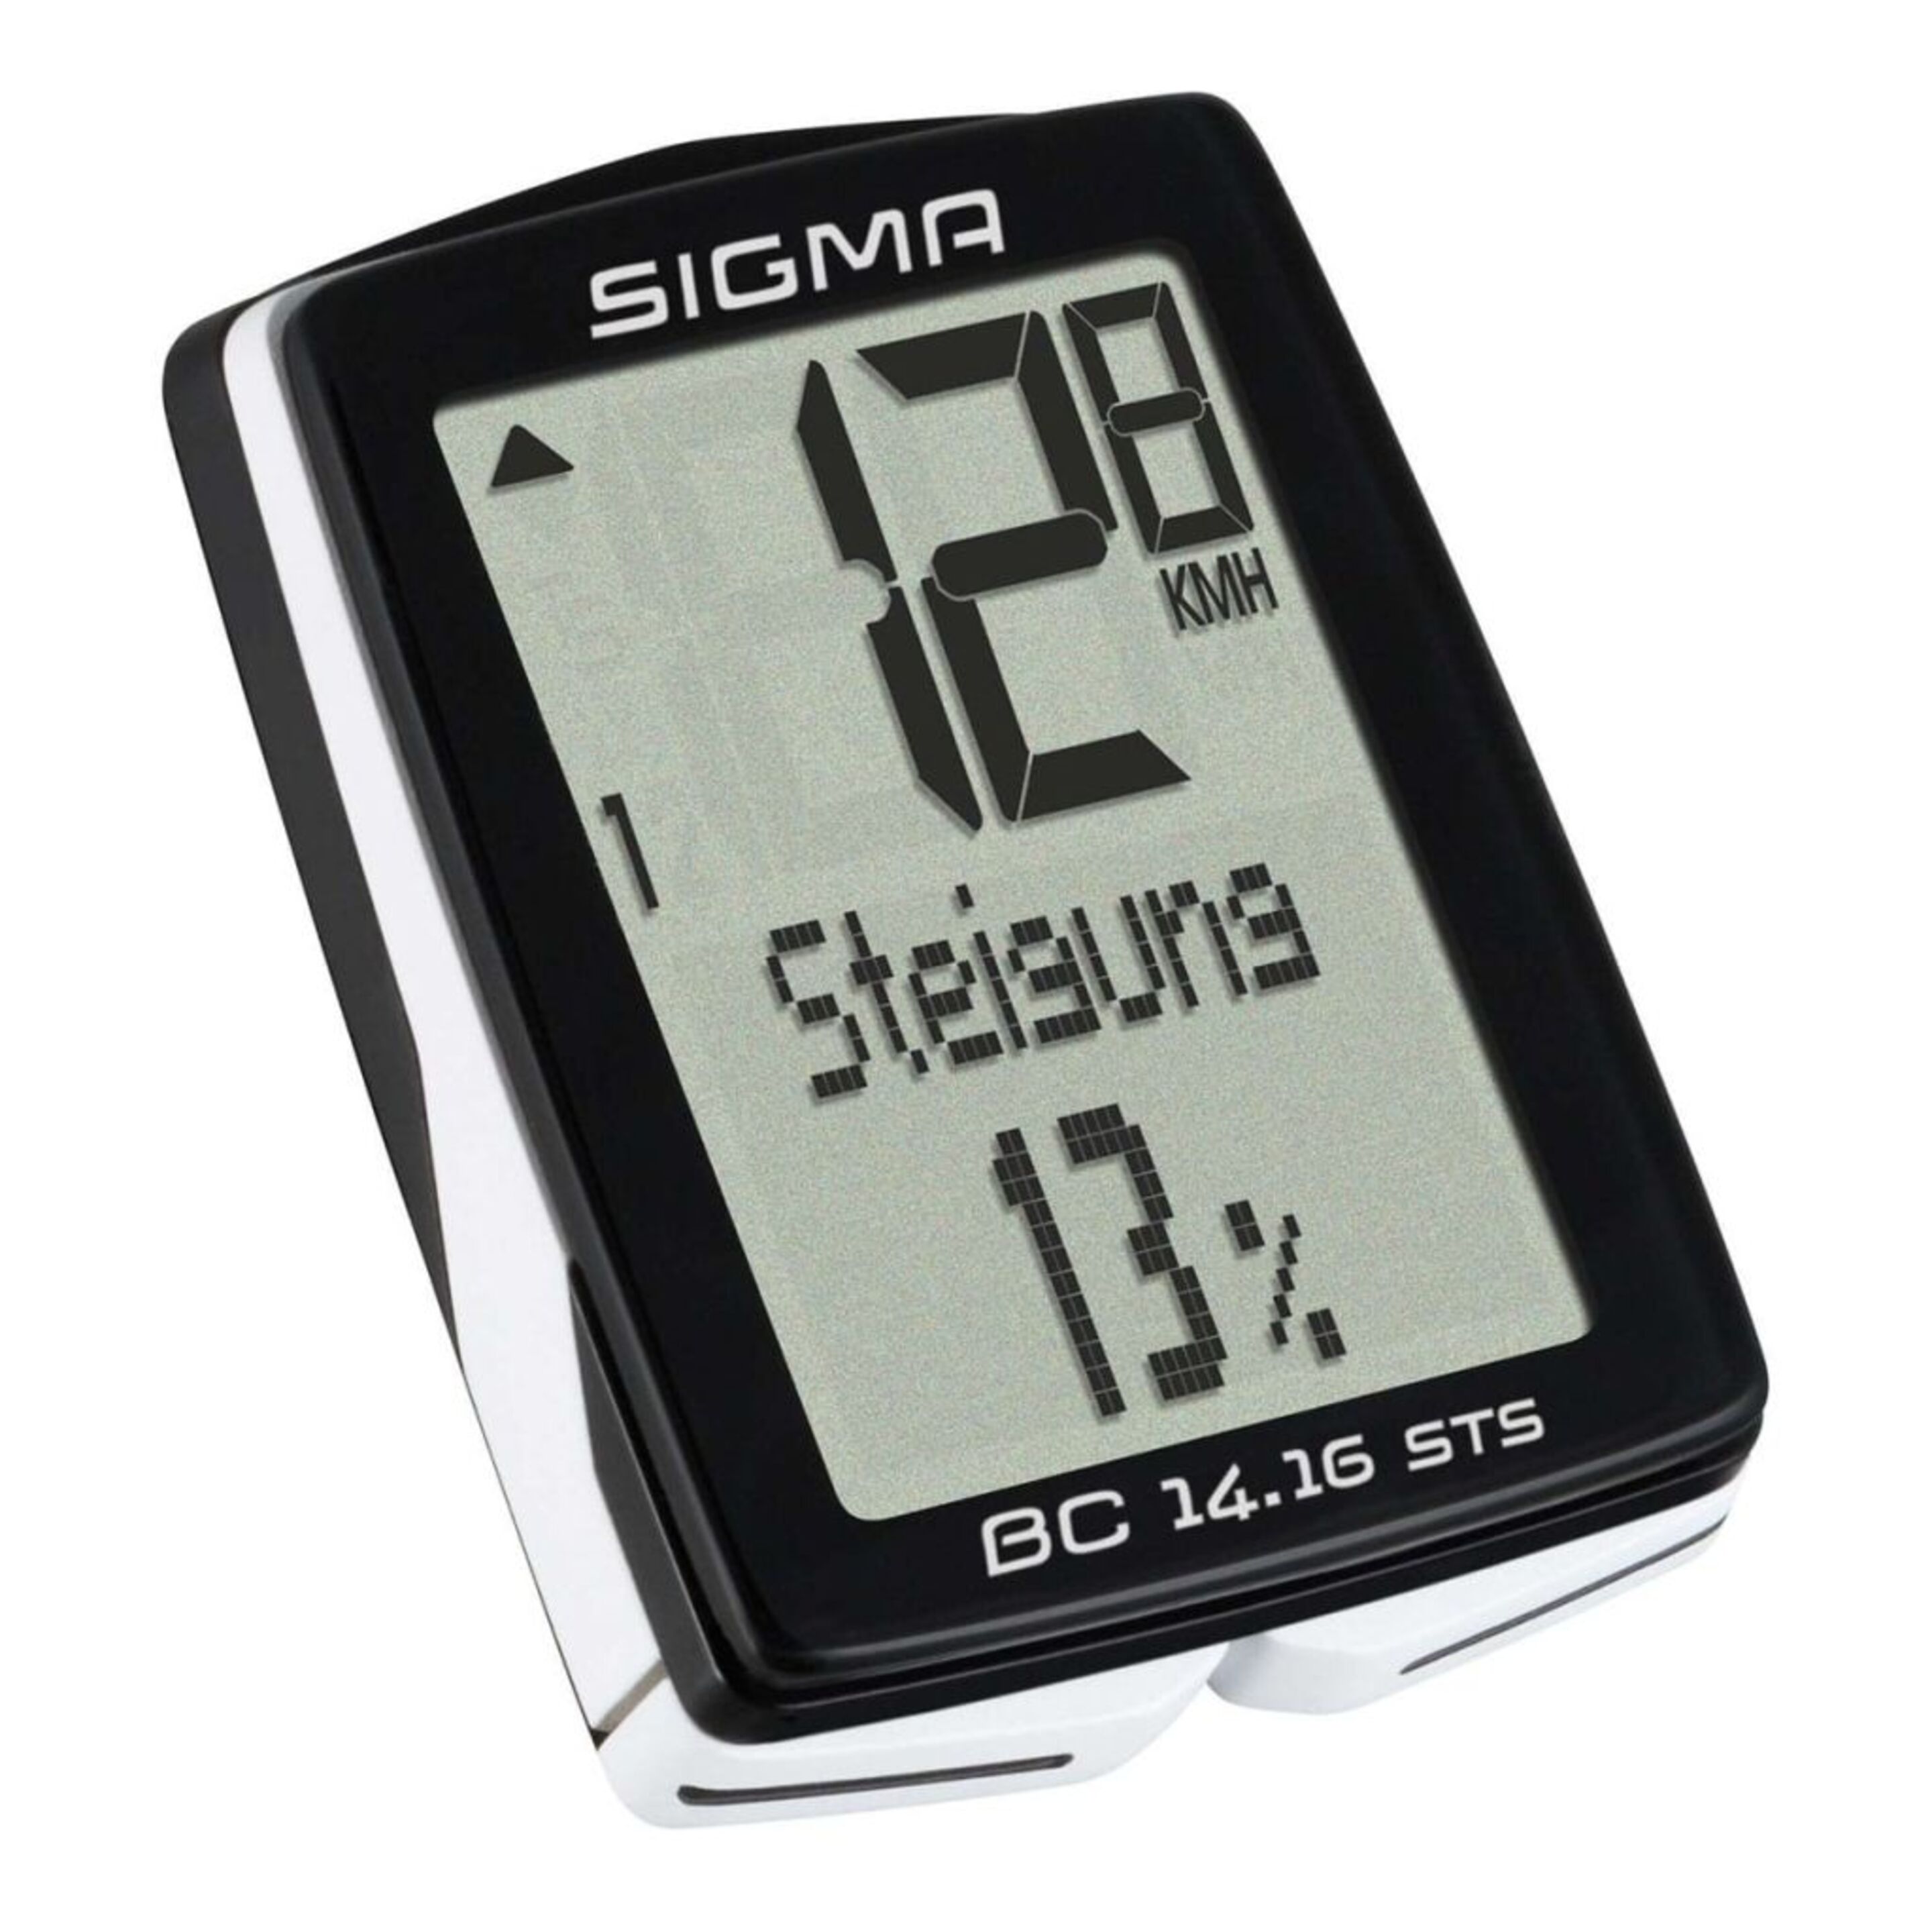 Cuentakilometros Sigma Bc 14.16 Sts Altitud